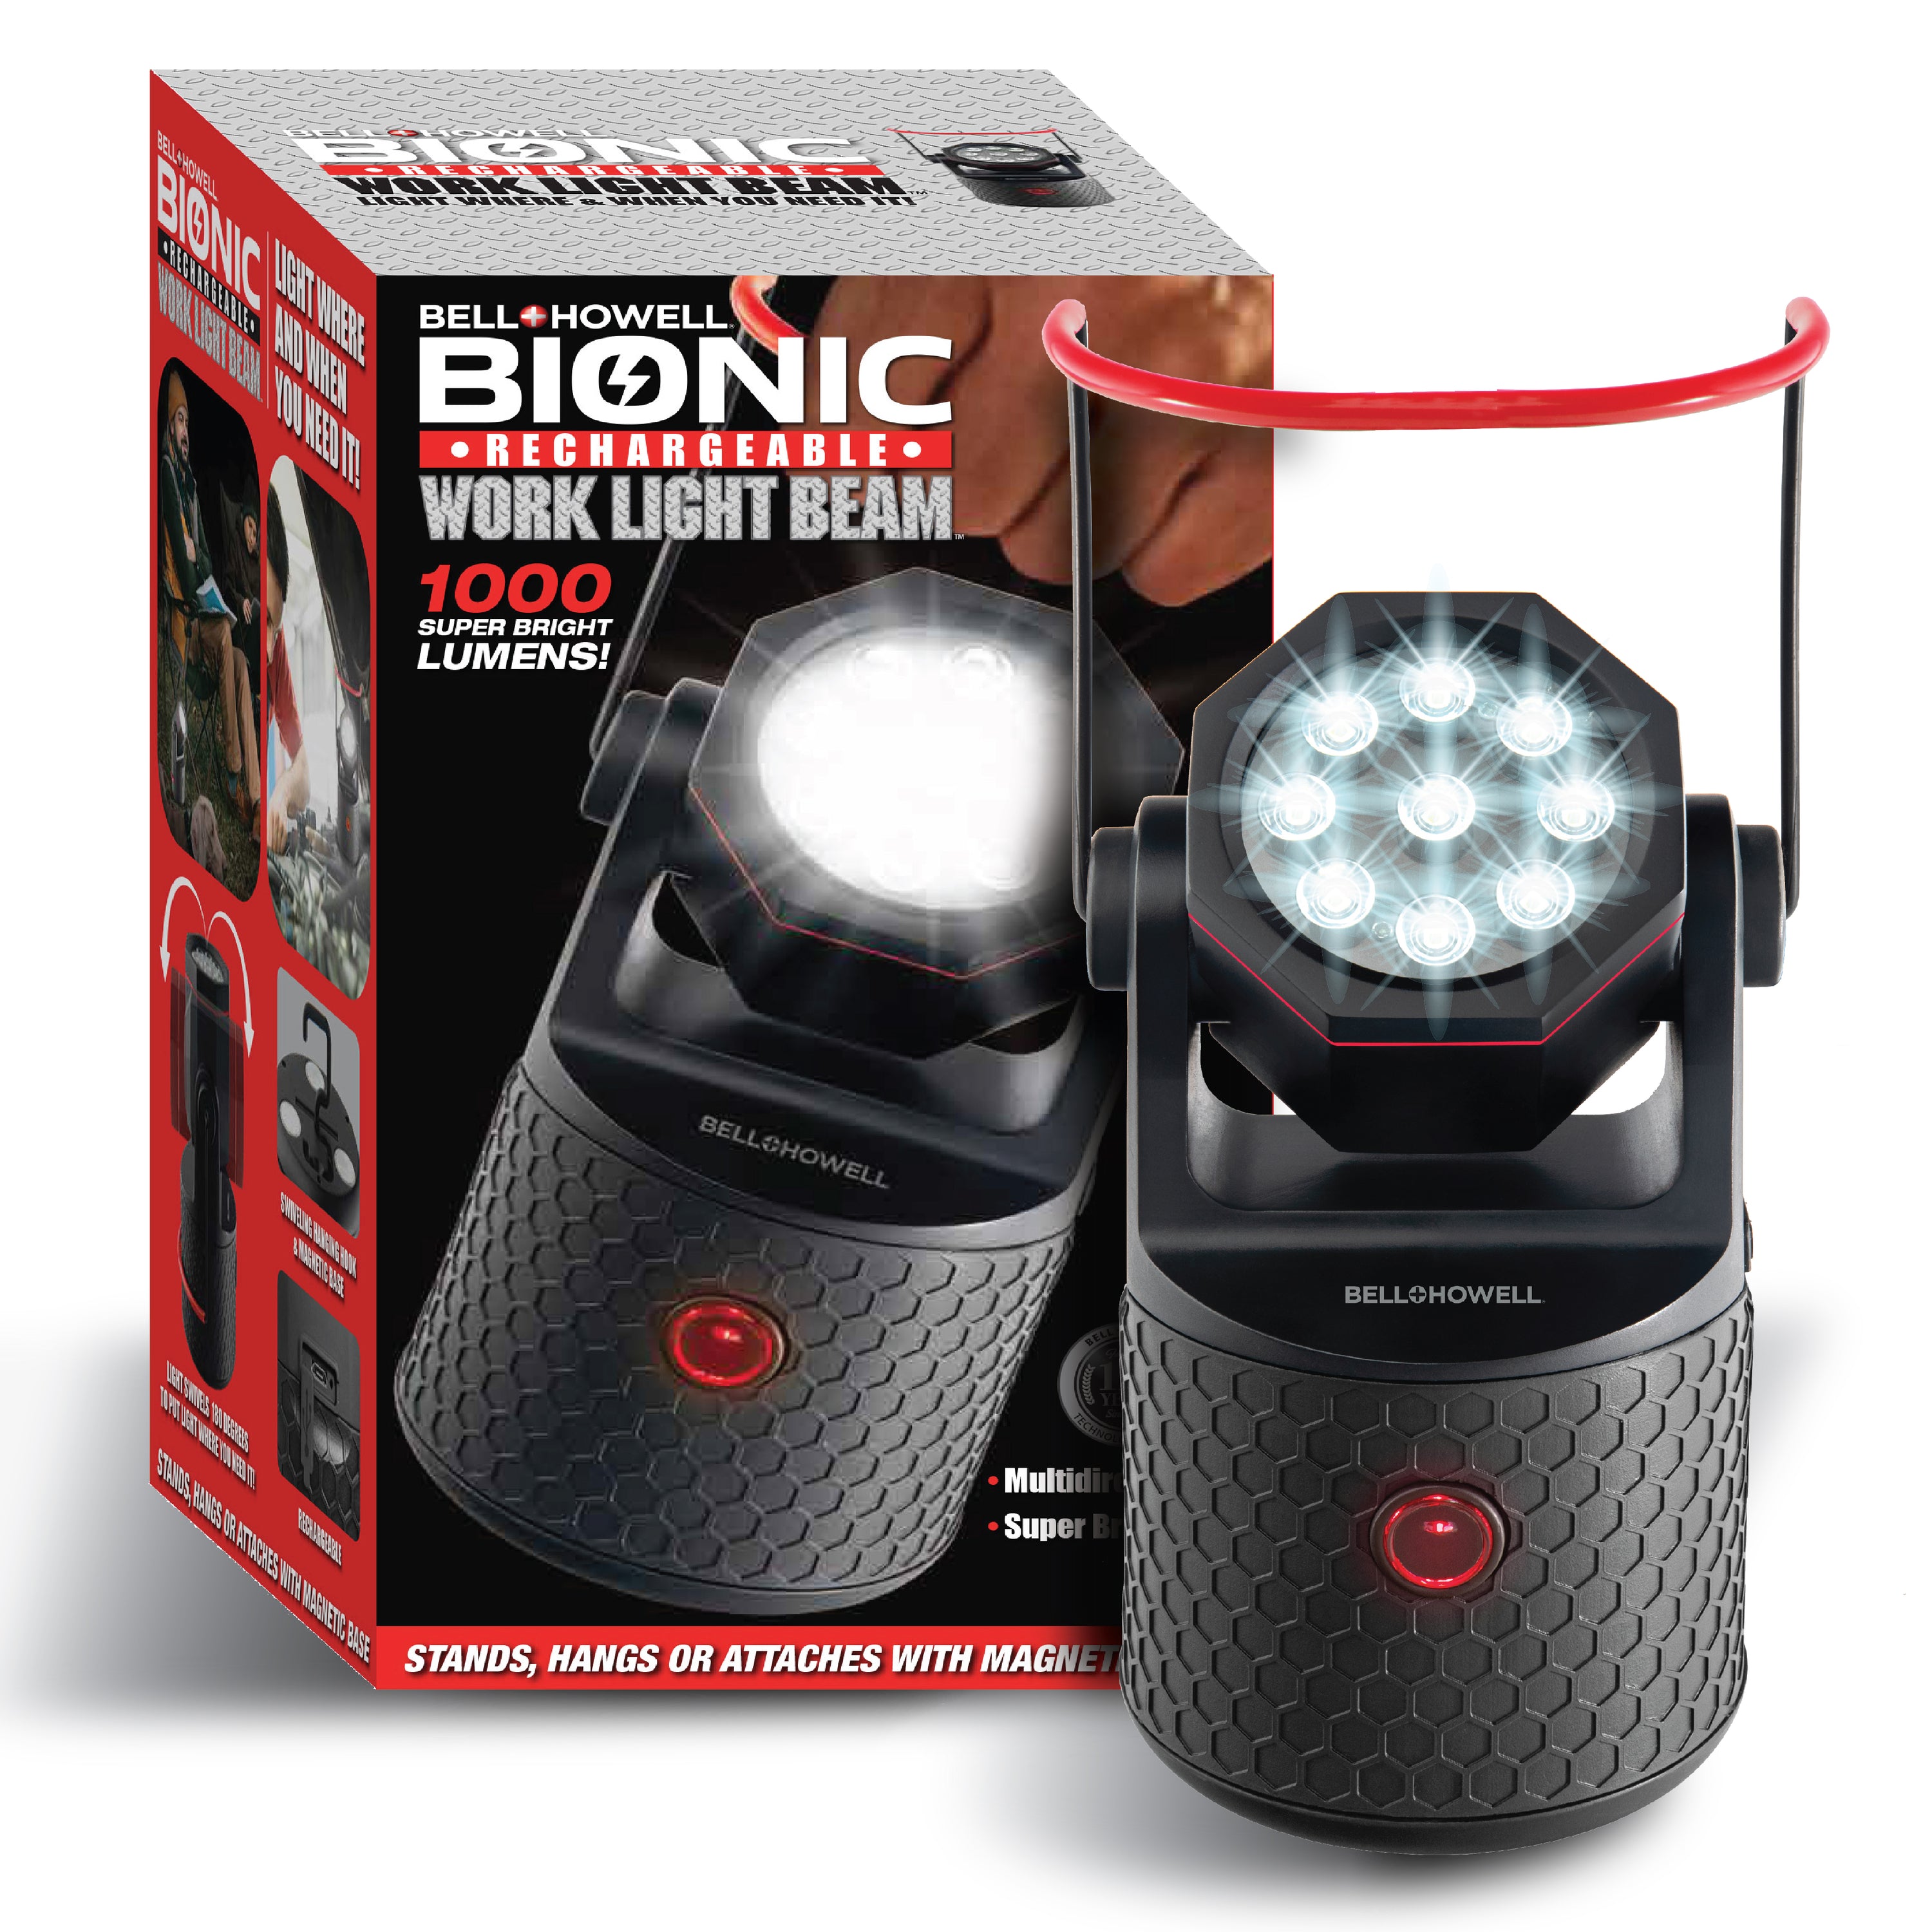 Bell + Howell Bionic Work Light Beam 1000 Lumens